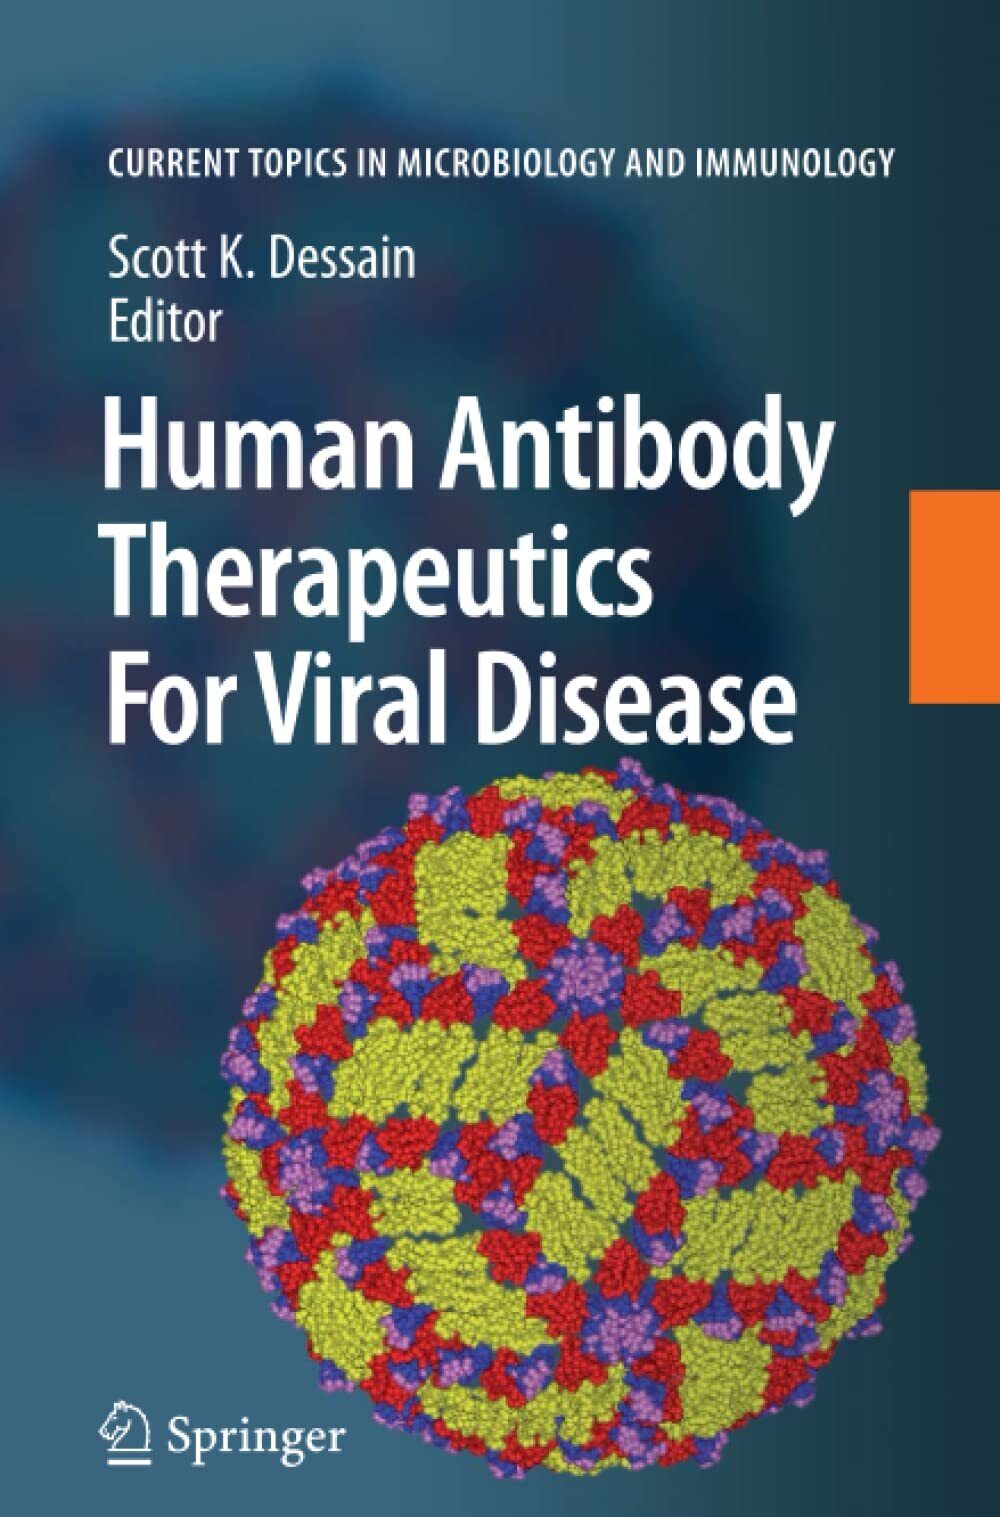 Human Antibody Therapeutics For Viral Disease - Various - Springer, 2010